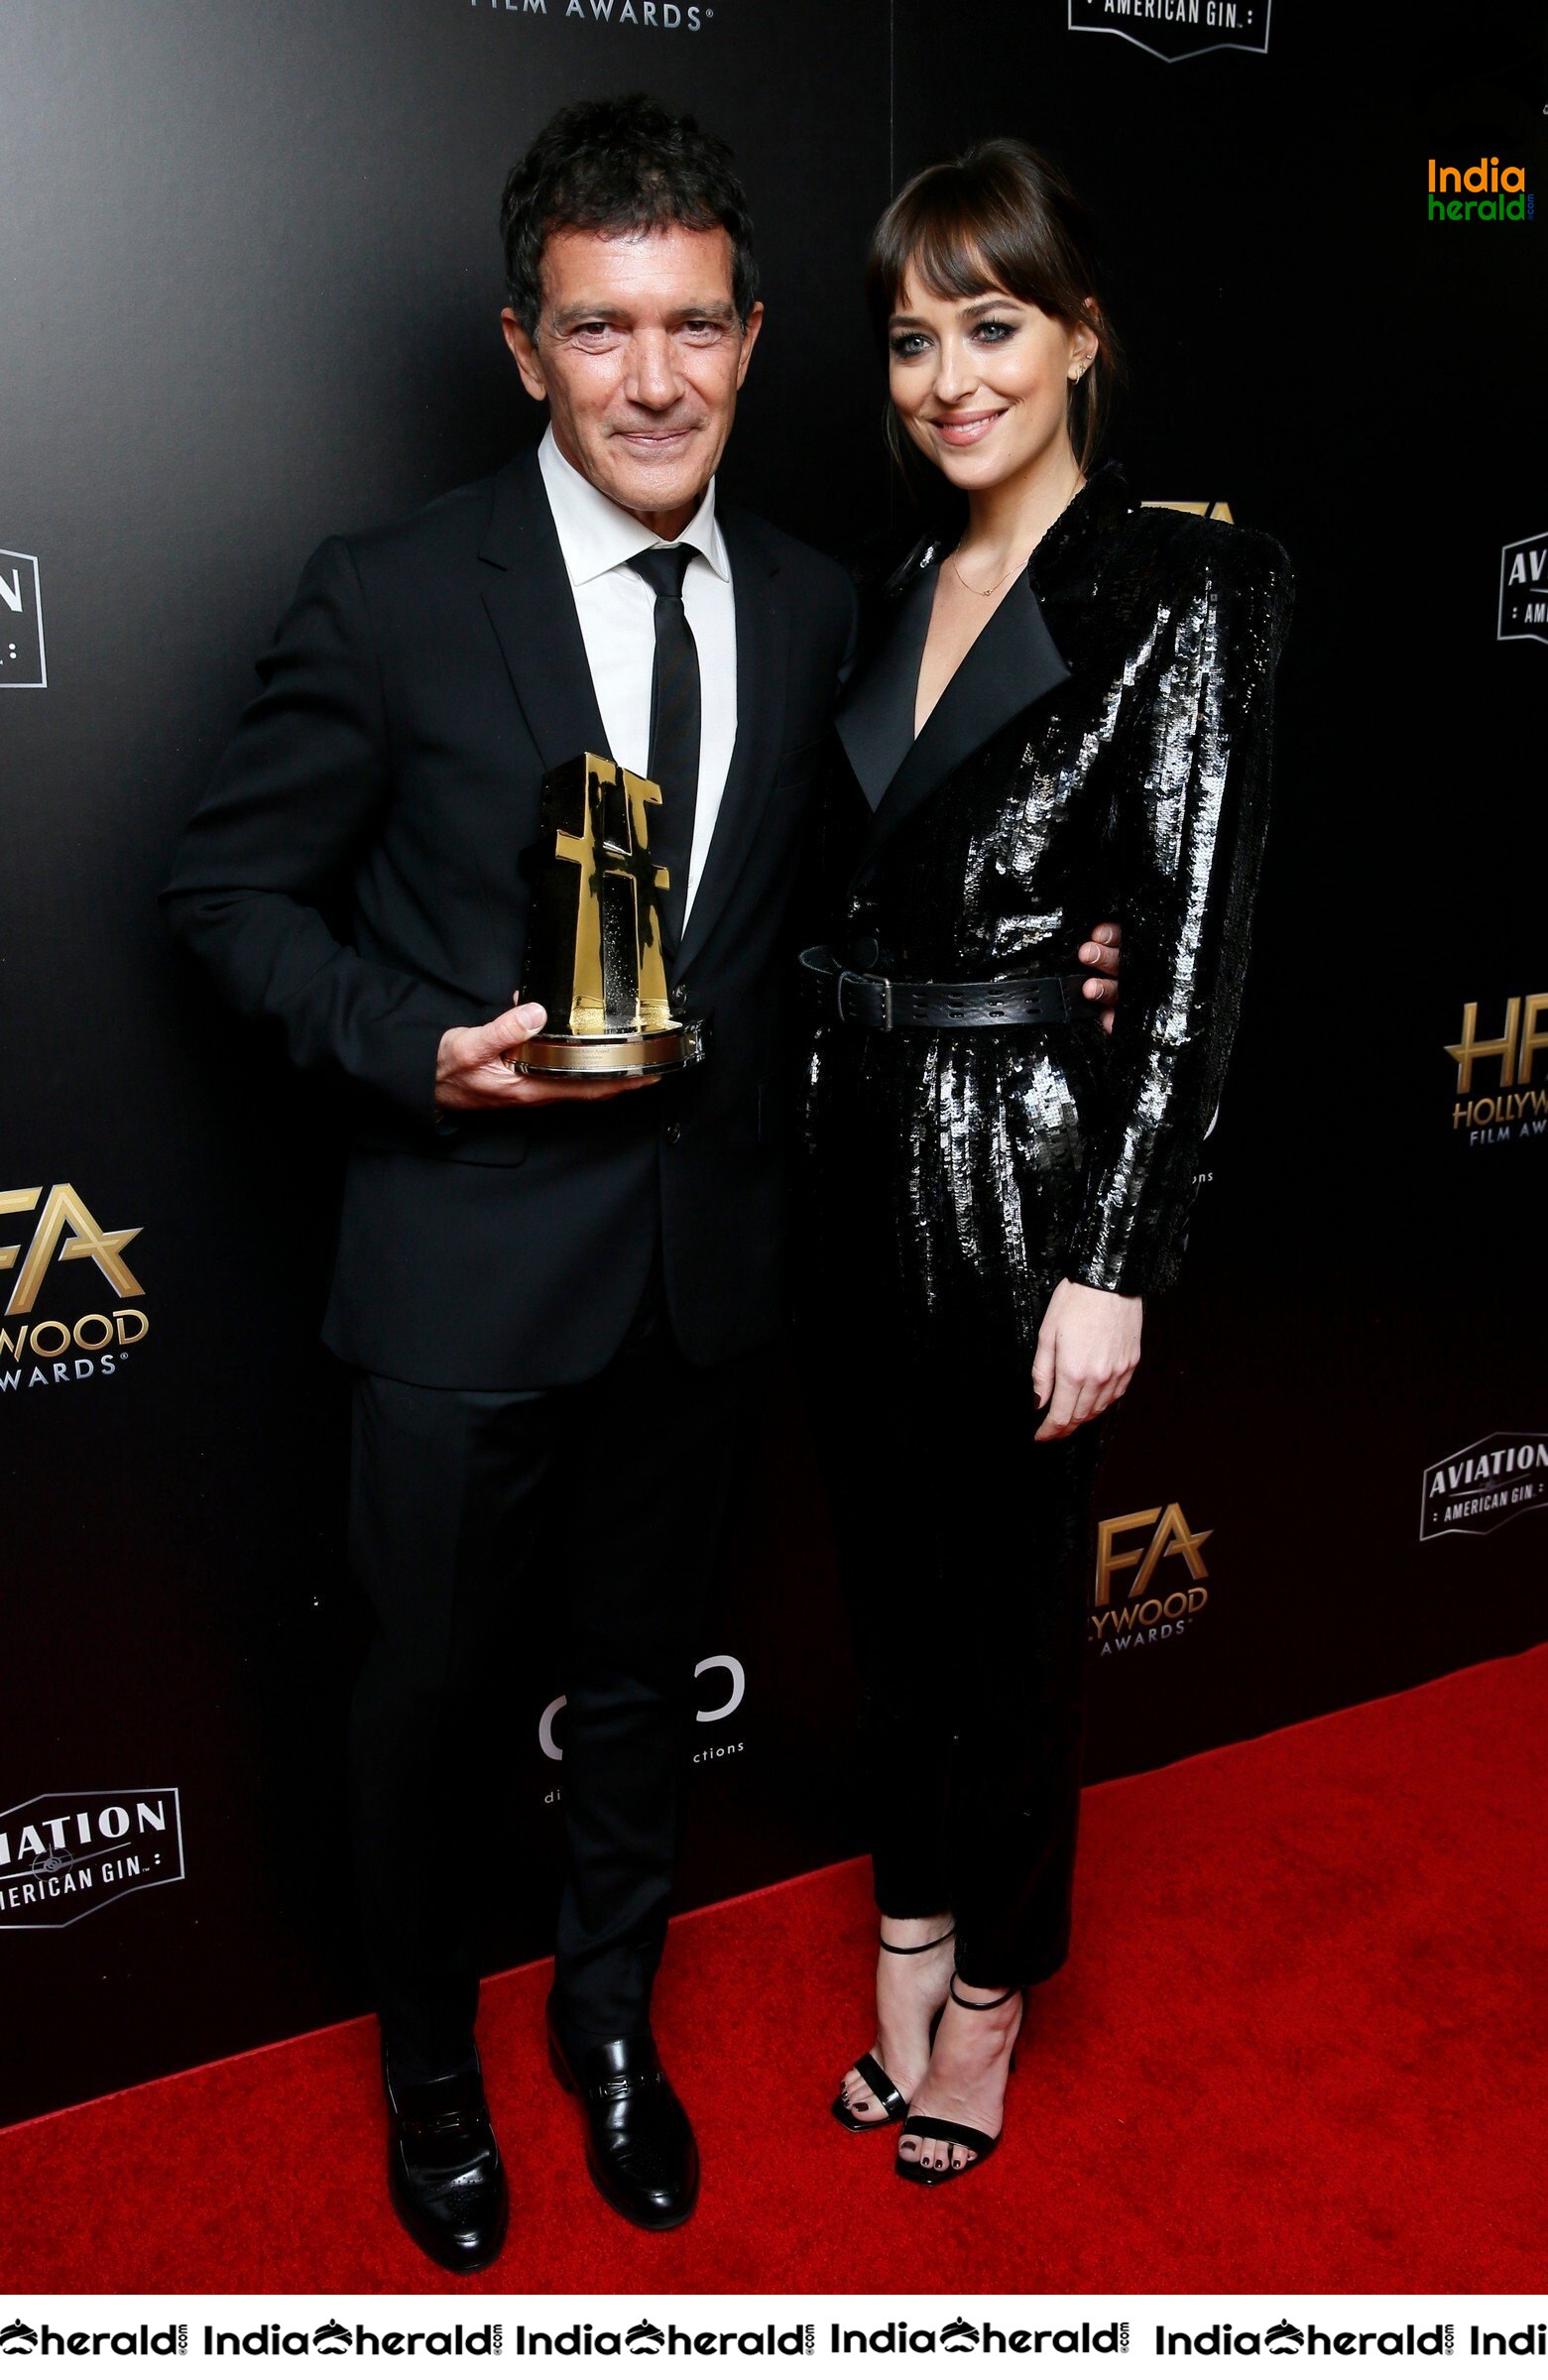 Dakota Johnson at 23rd Annual Hollywood Film Awards Red Carpet Set 2